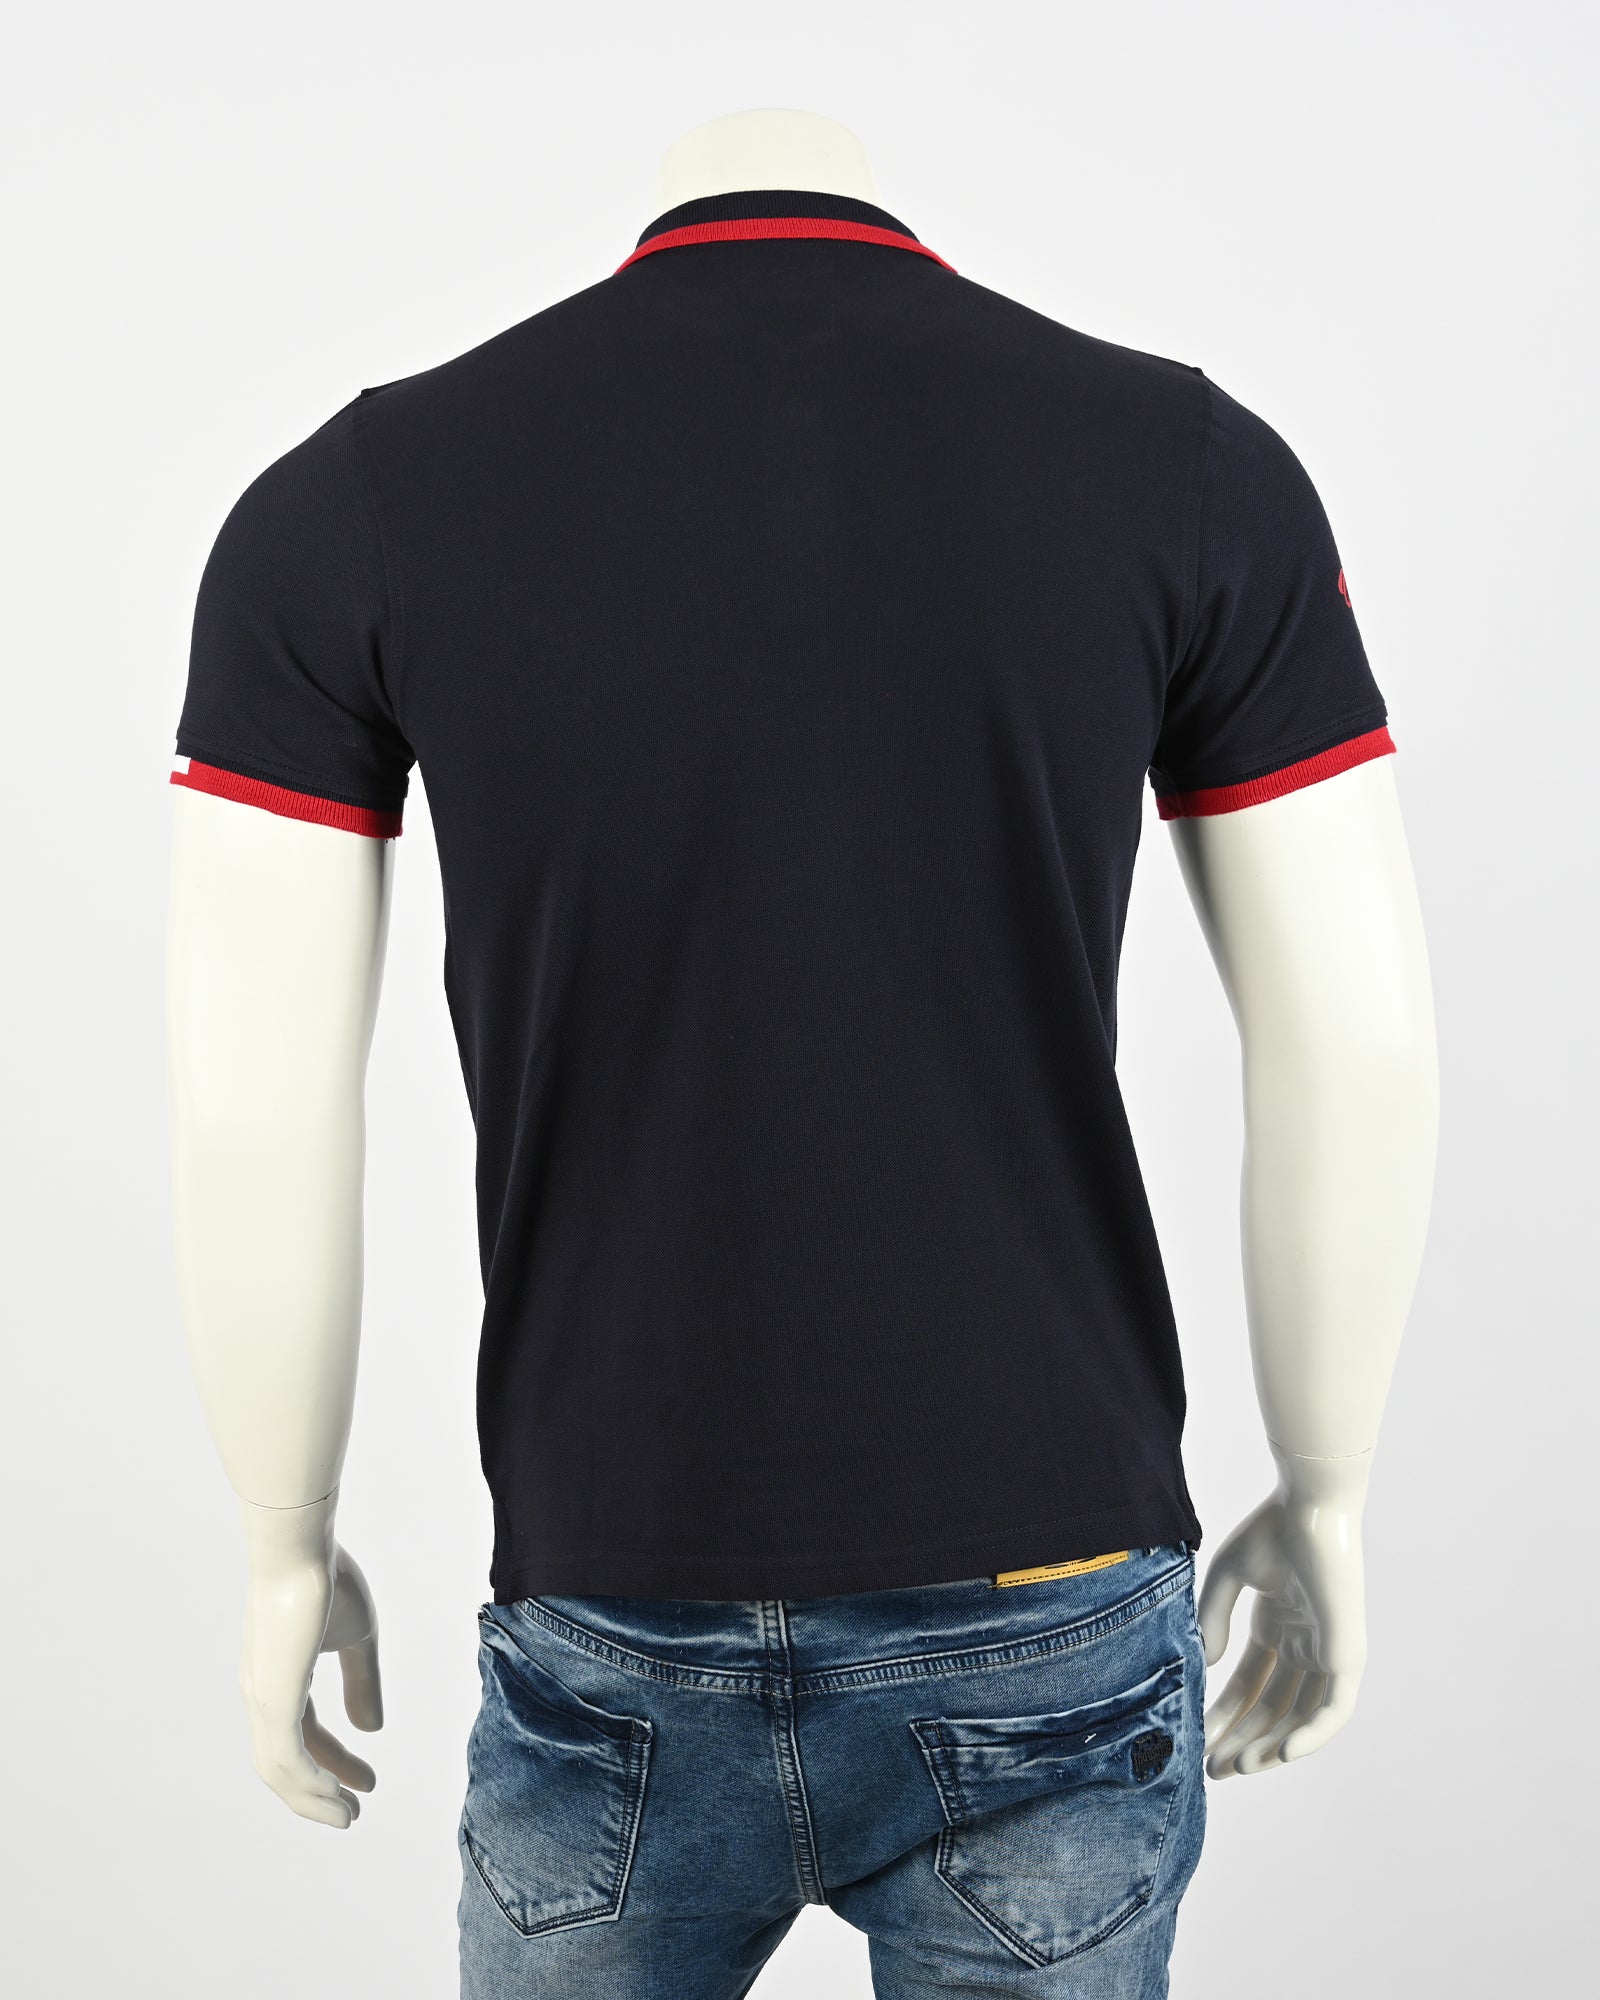 Milano bulls polo t-shirt with short sleeves